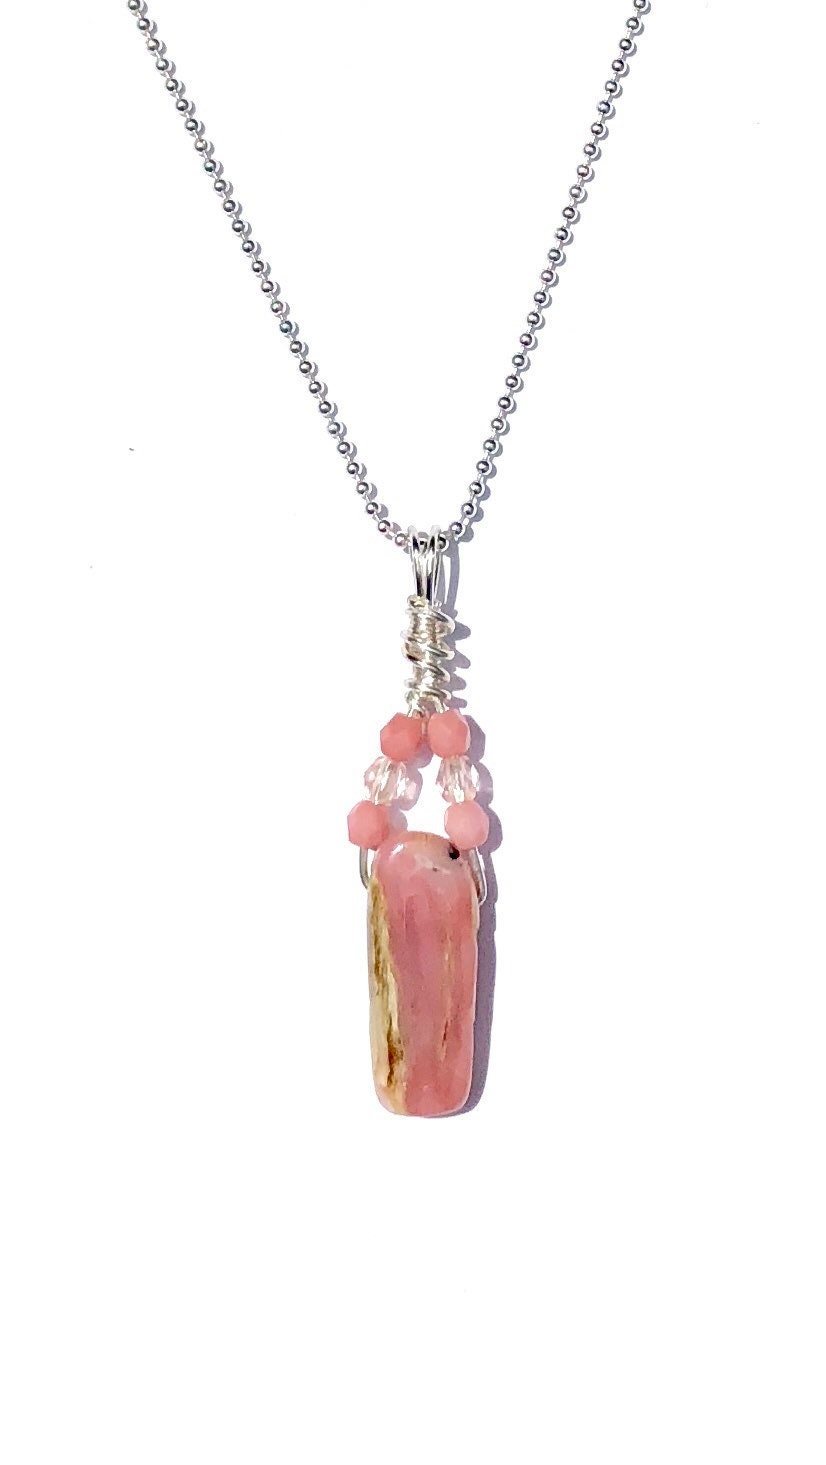 Peruvian Pink Opal Necklace Pink Opal Beaded Necklace Pink Necklace